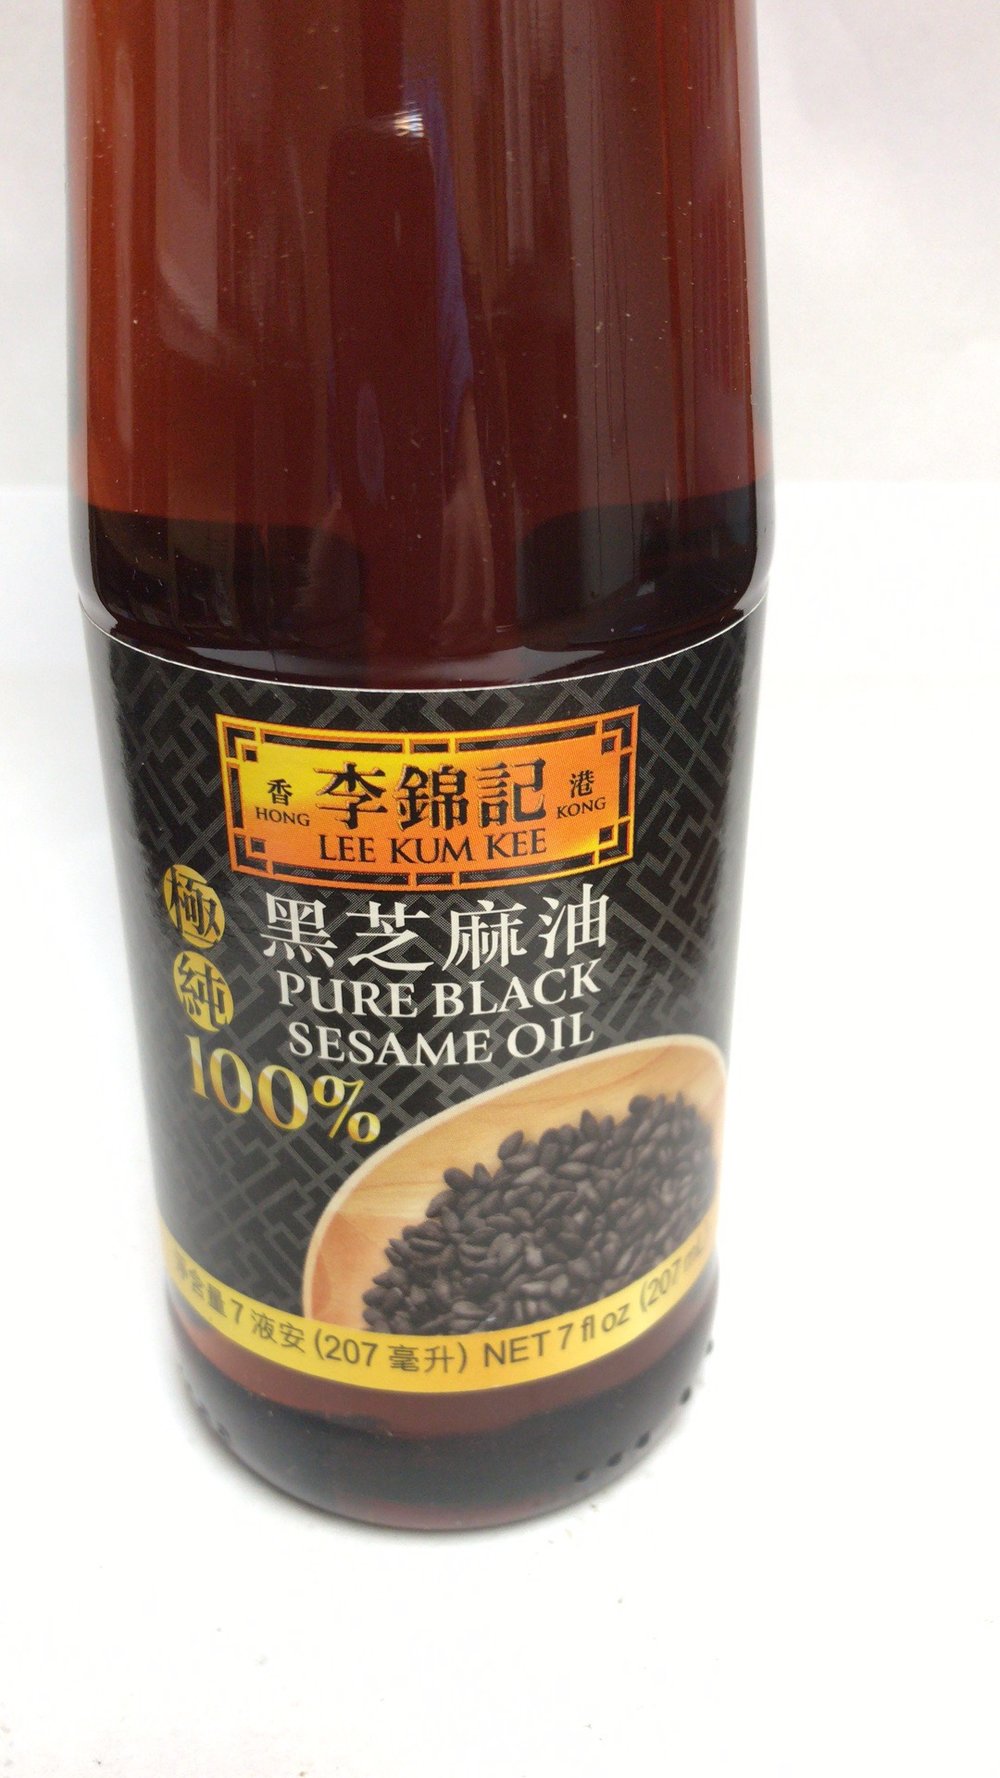 LEE KUM KEE PURE BLACK SESAME OIL, 李錦記黑芝麻油7 — Sun's Market